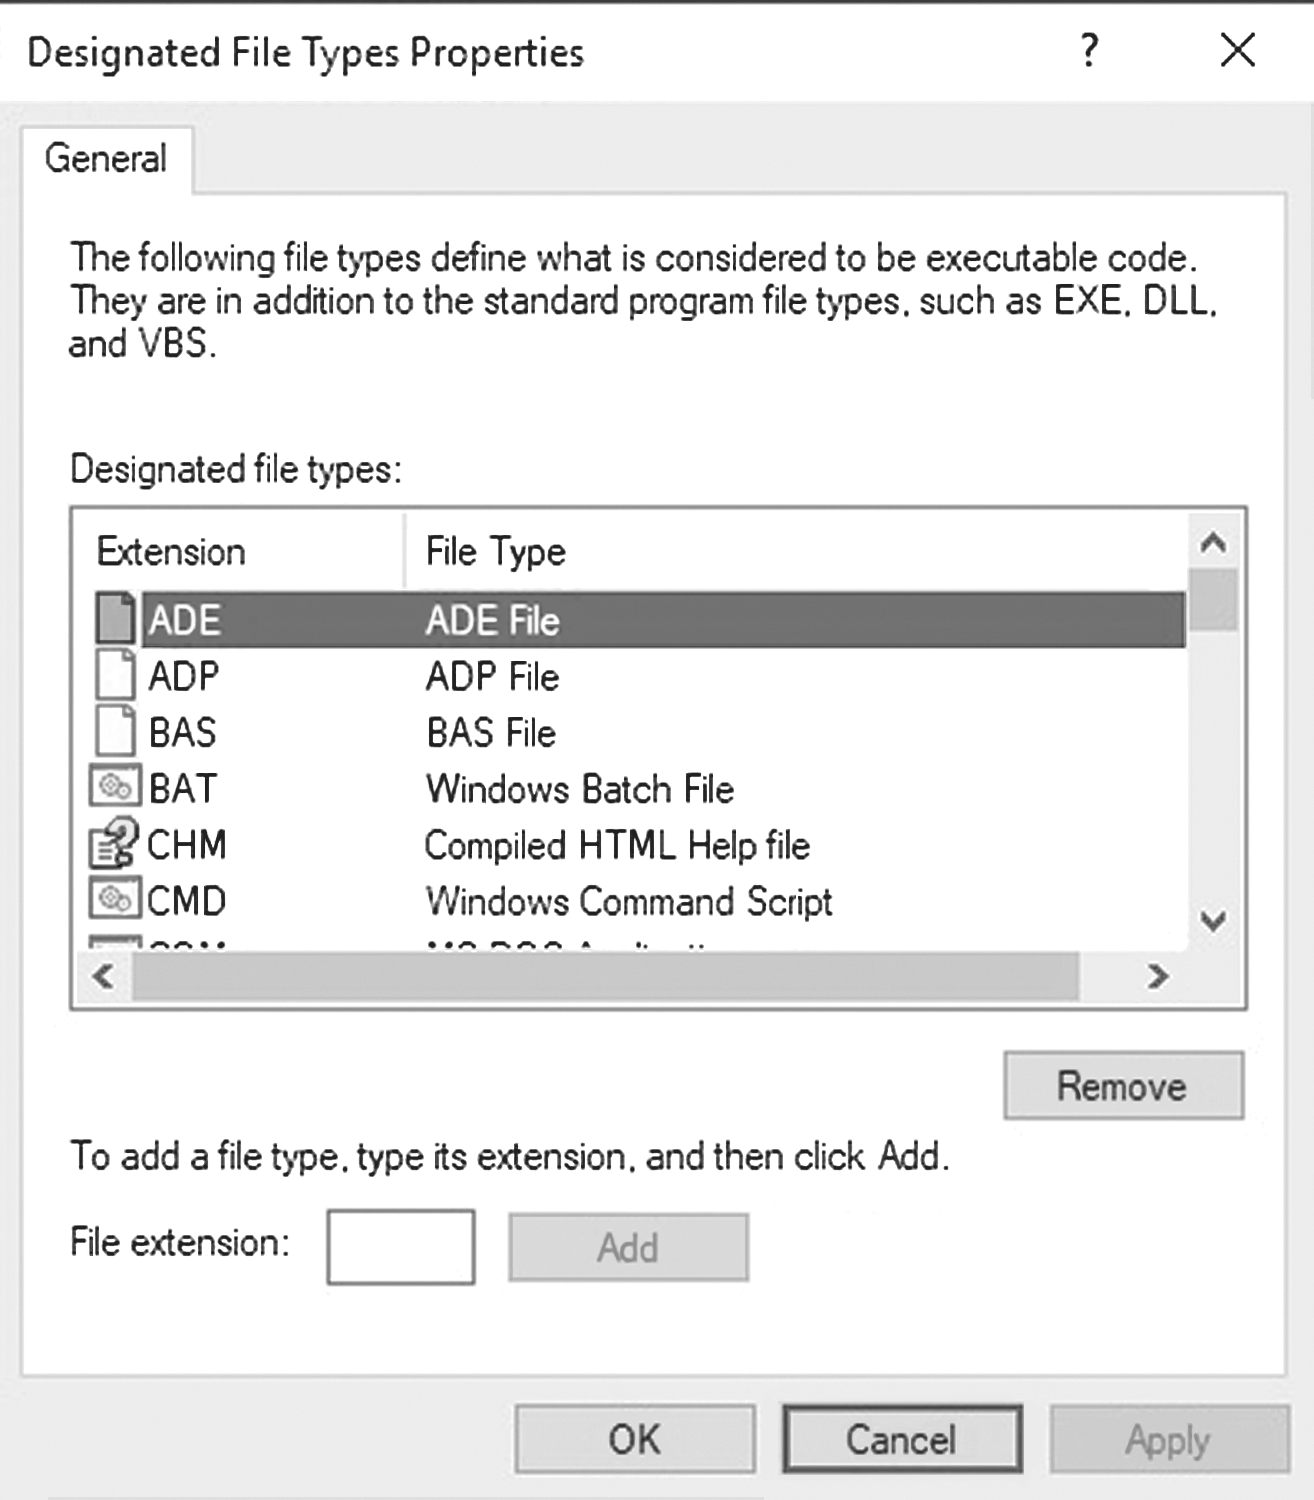 A screenshot of designated file type properties.